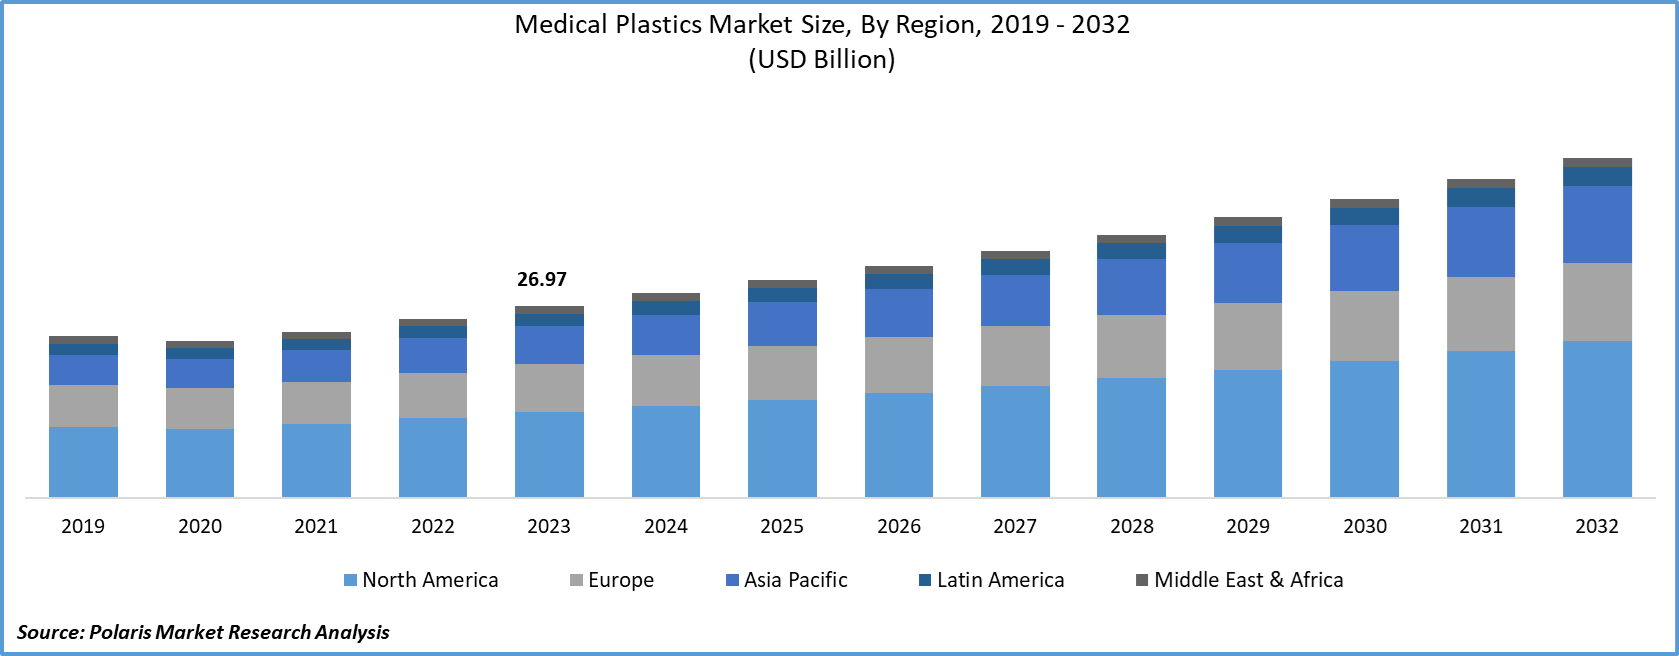 Medical Plastics Market Size